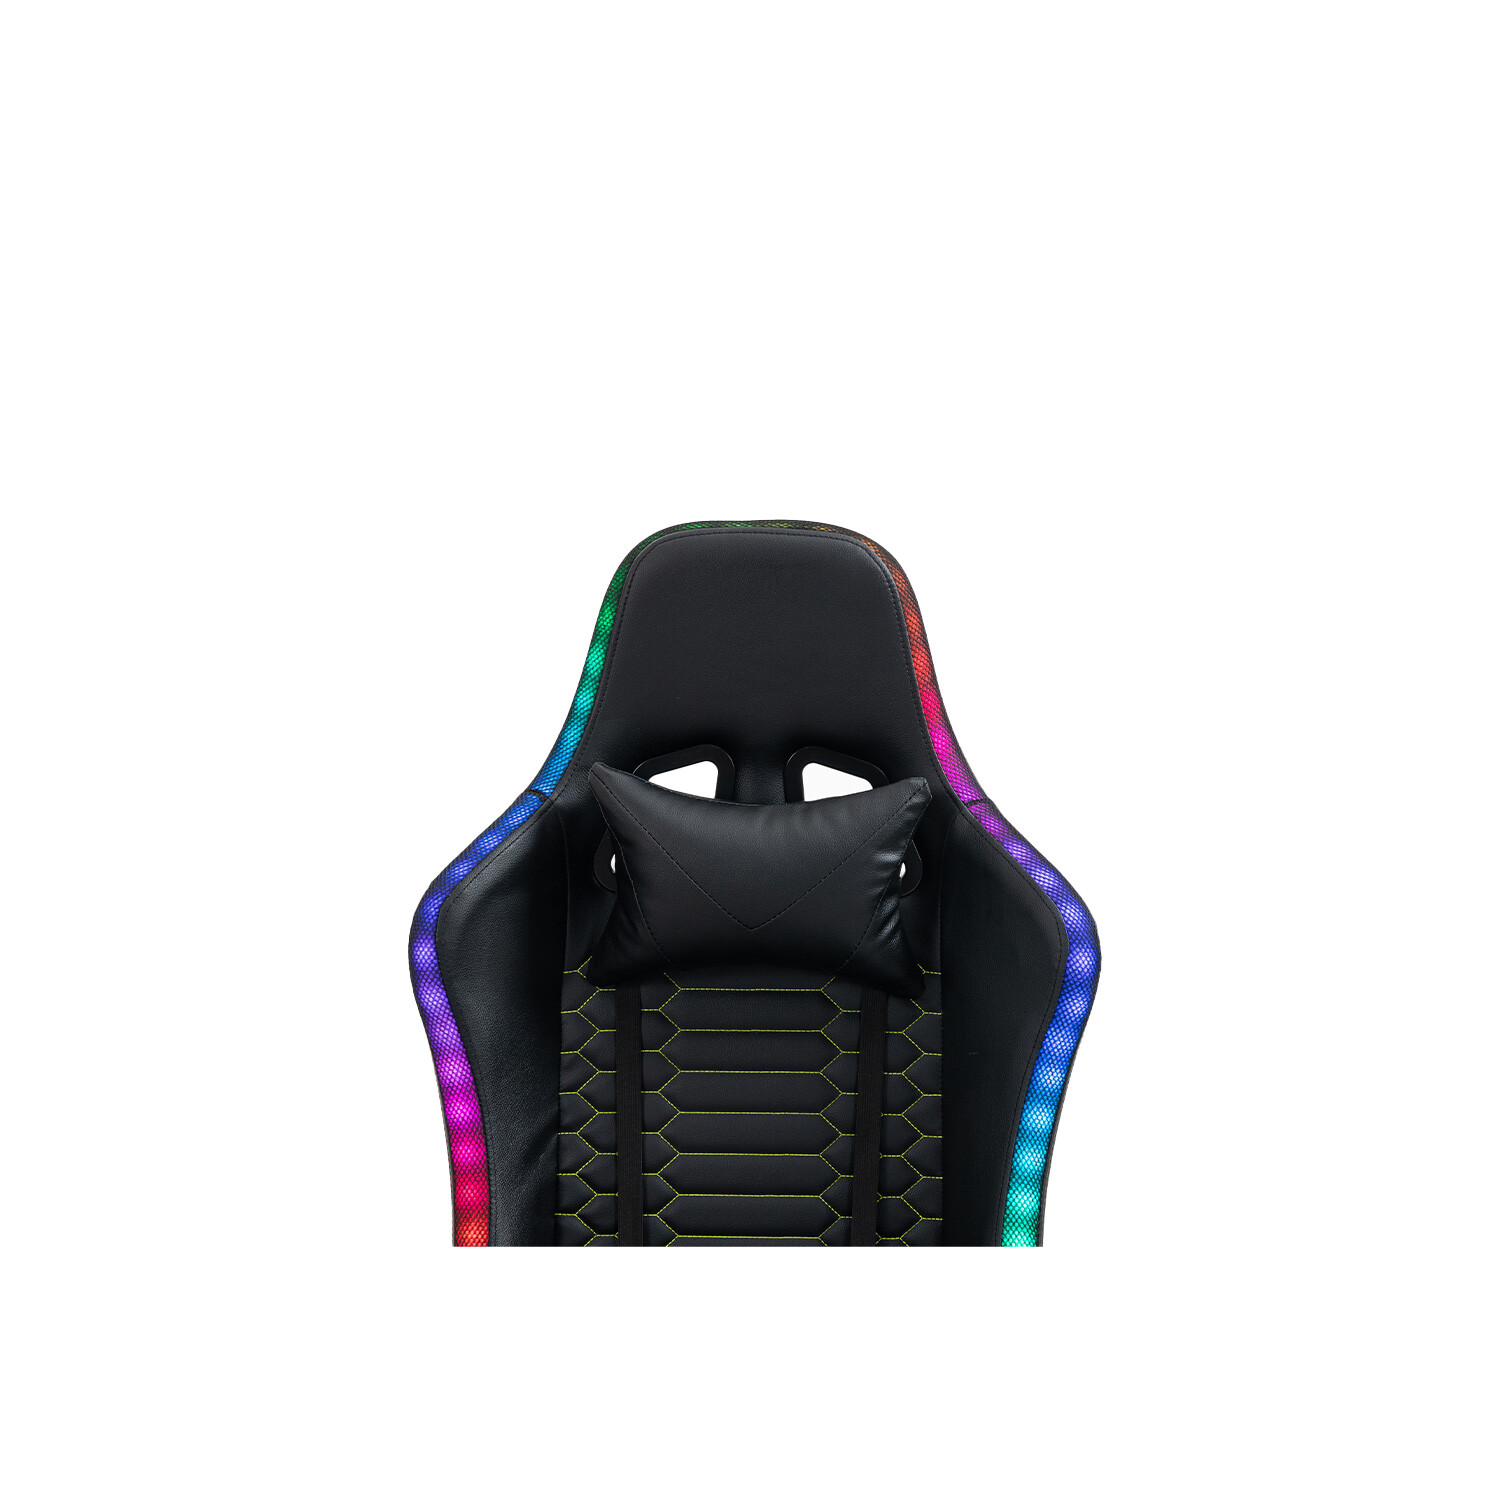 Triton LED Gaming Chair - Black Image 10